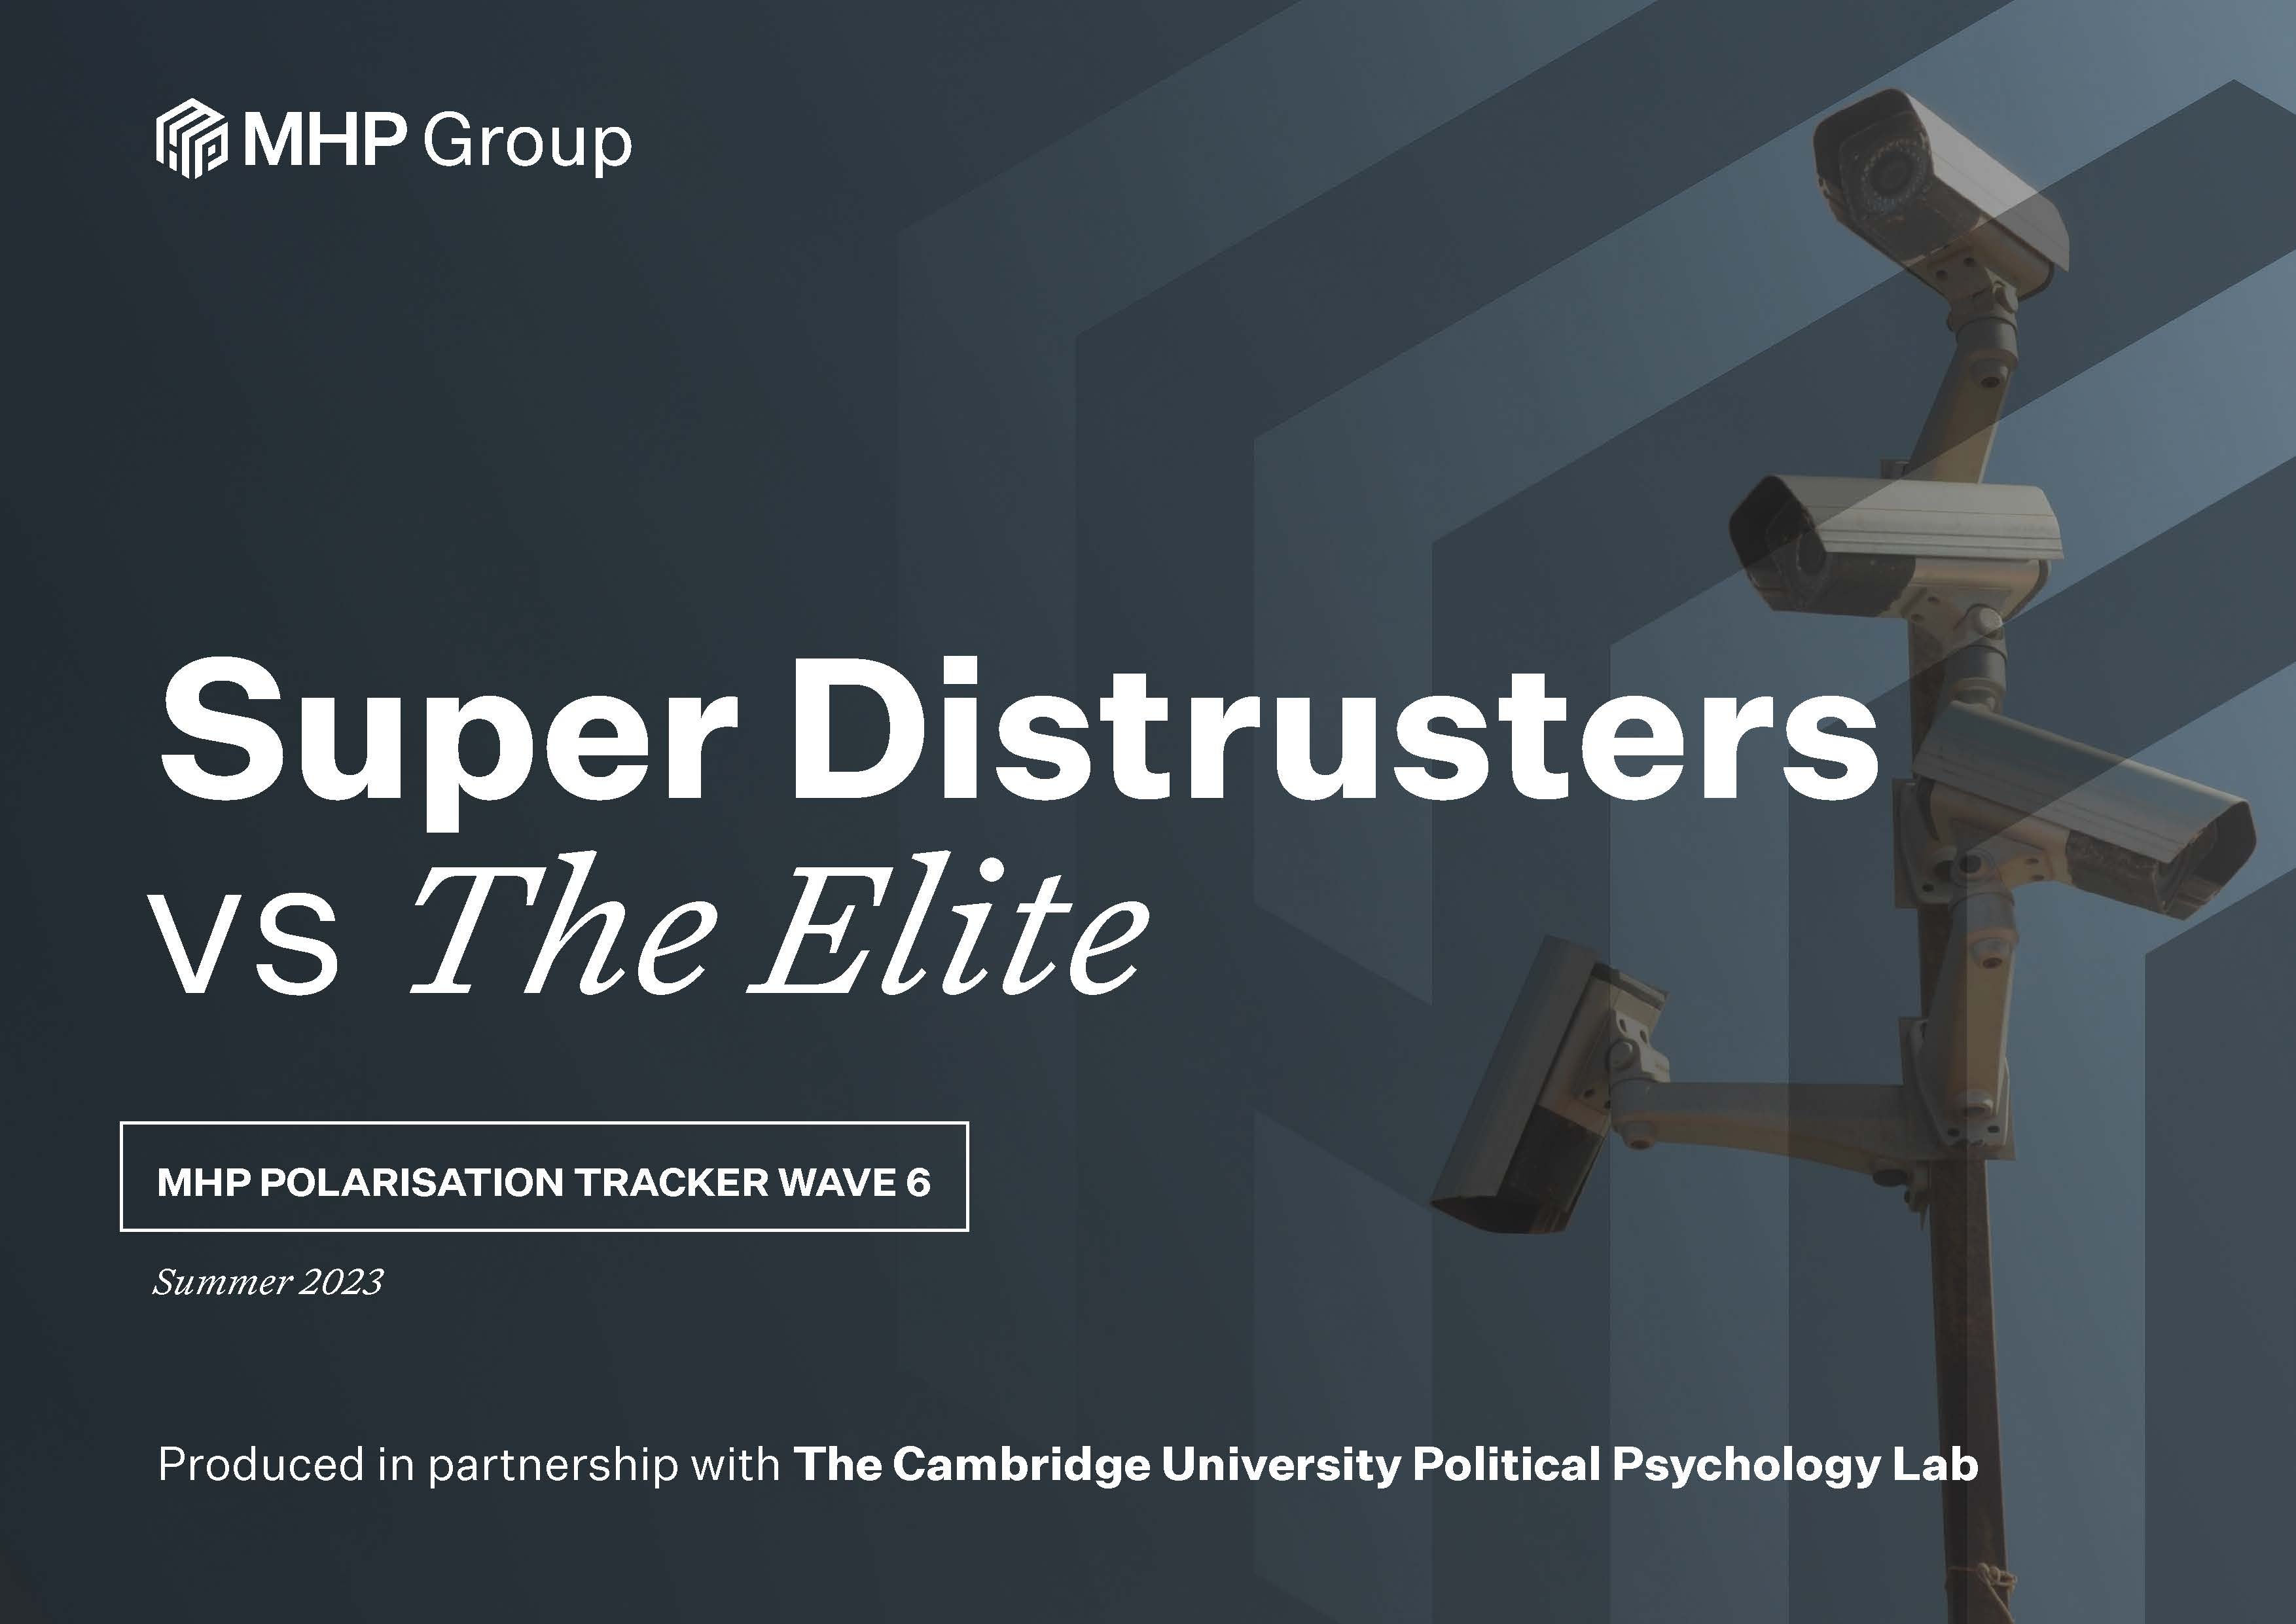 MHP Polarisation Tracker Wave 6: Super Distrusters vs The Elite